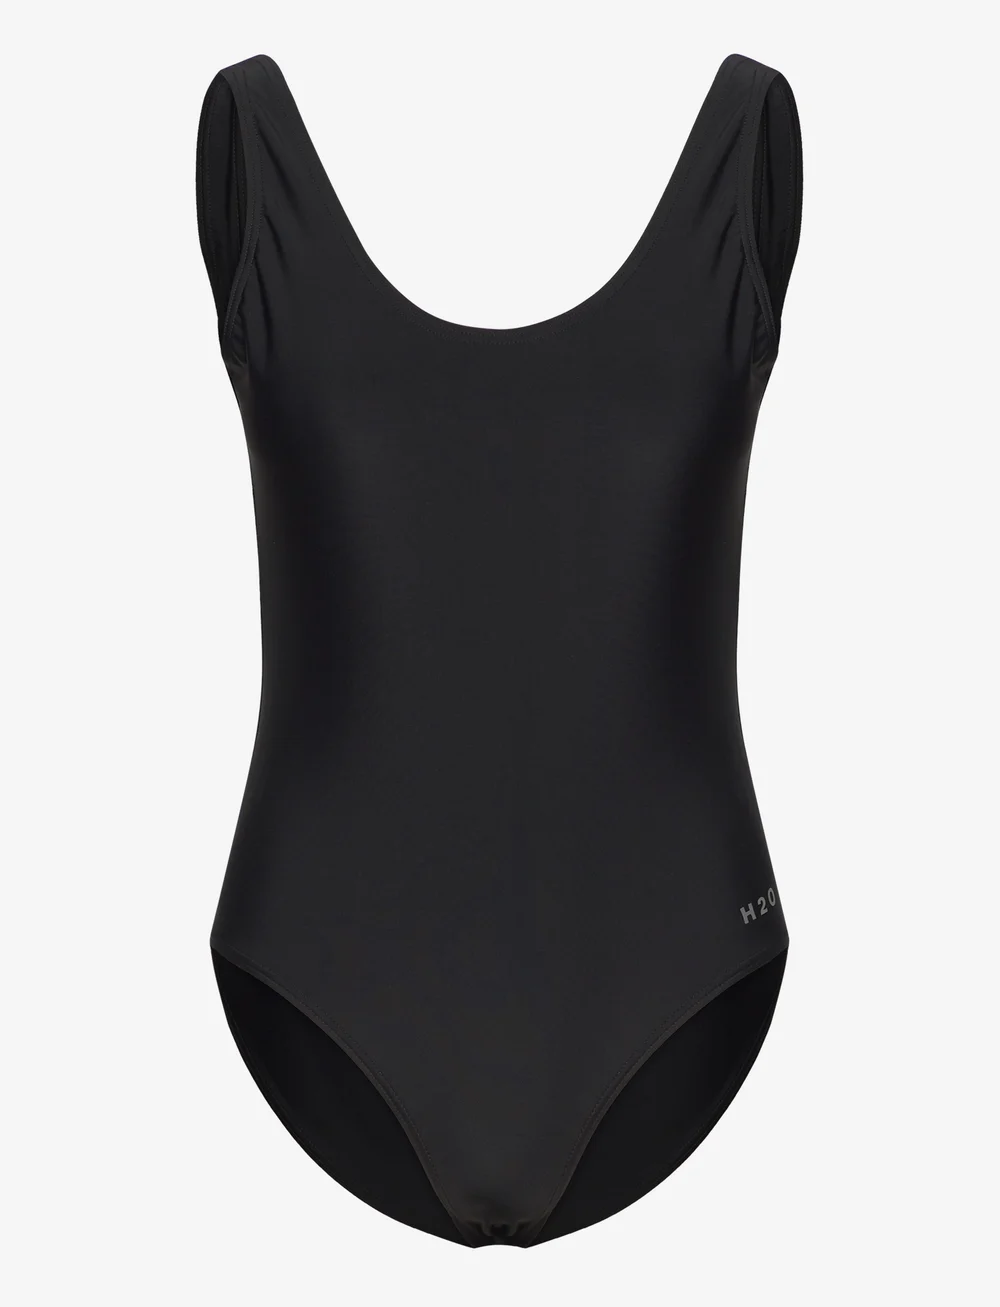 H2O Tornø Swim Suit - Swimsuits 